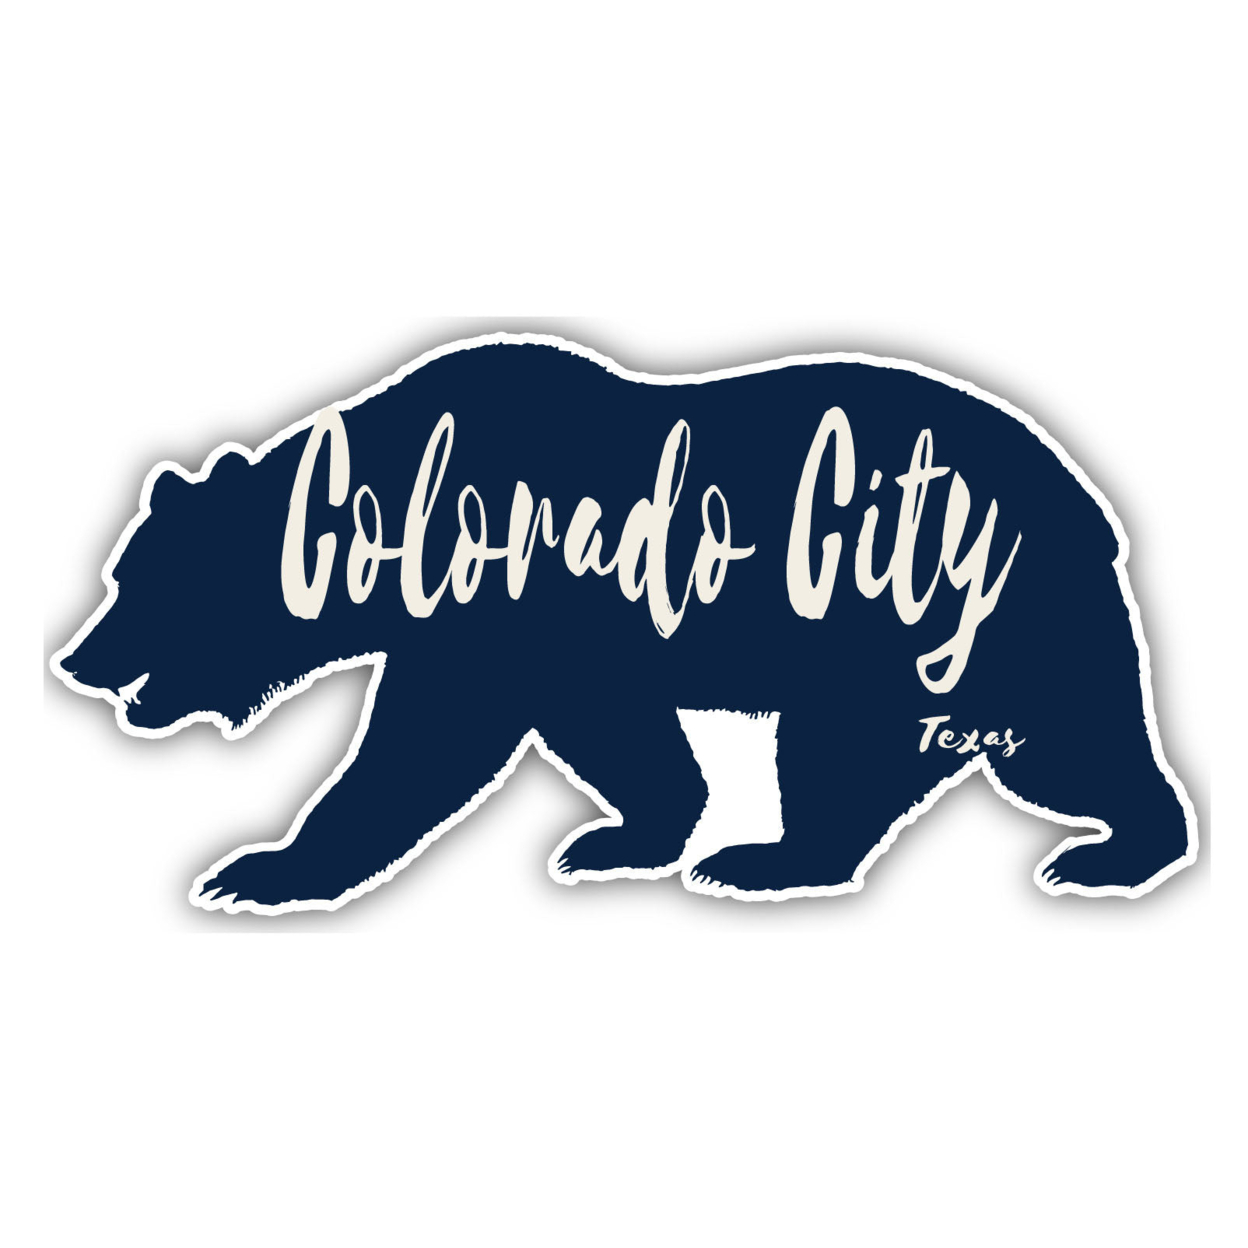 Colorado City Texas Souvenir Decorative Stickers (Choose Theme And Size) - Single Unit, 12-Inch, Bear